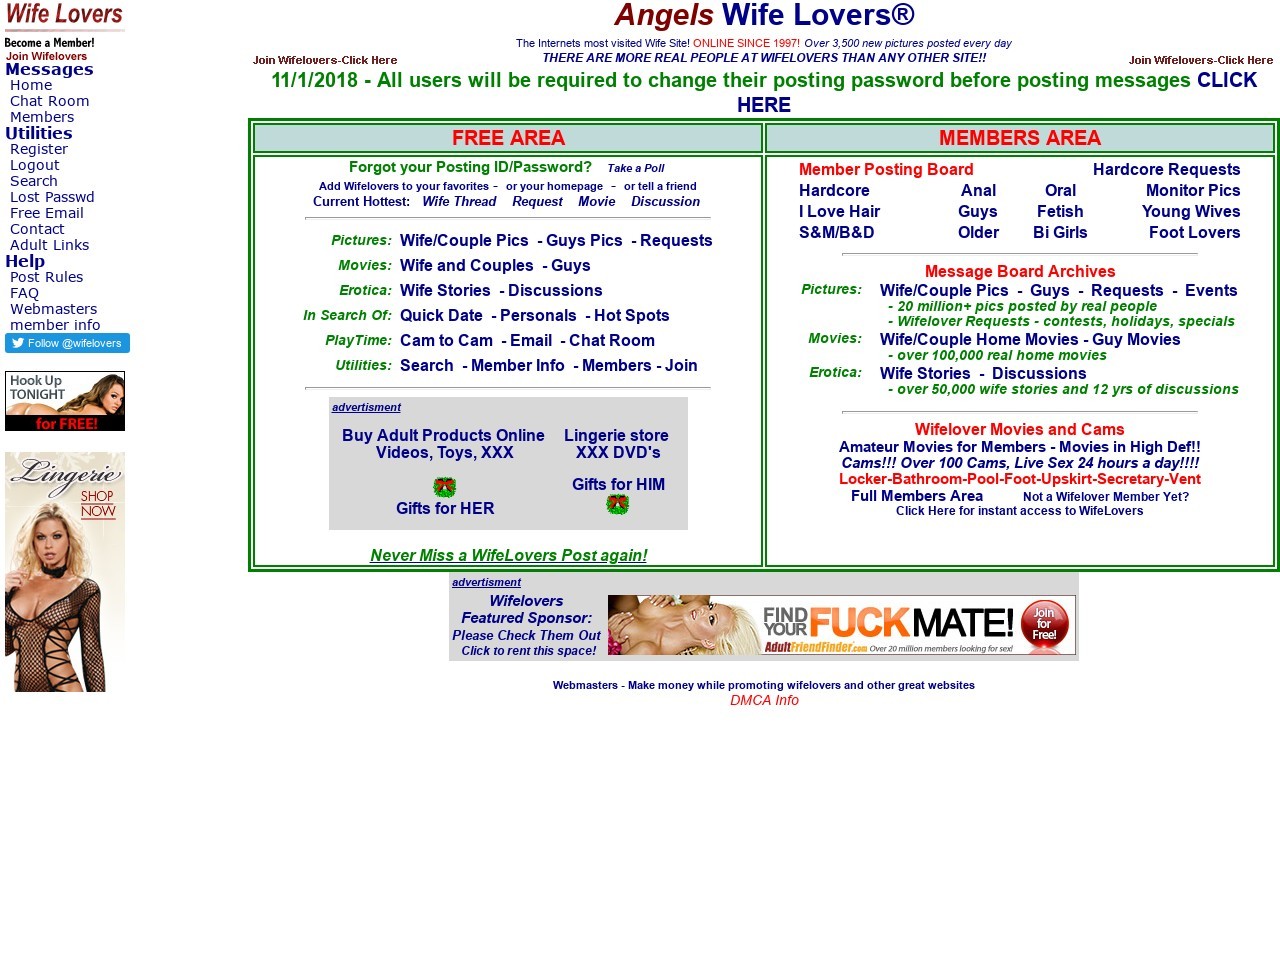 Angels wifelovers com